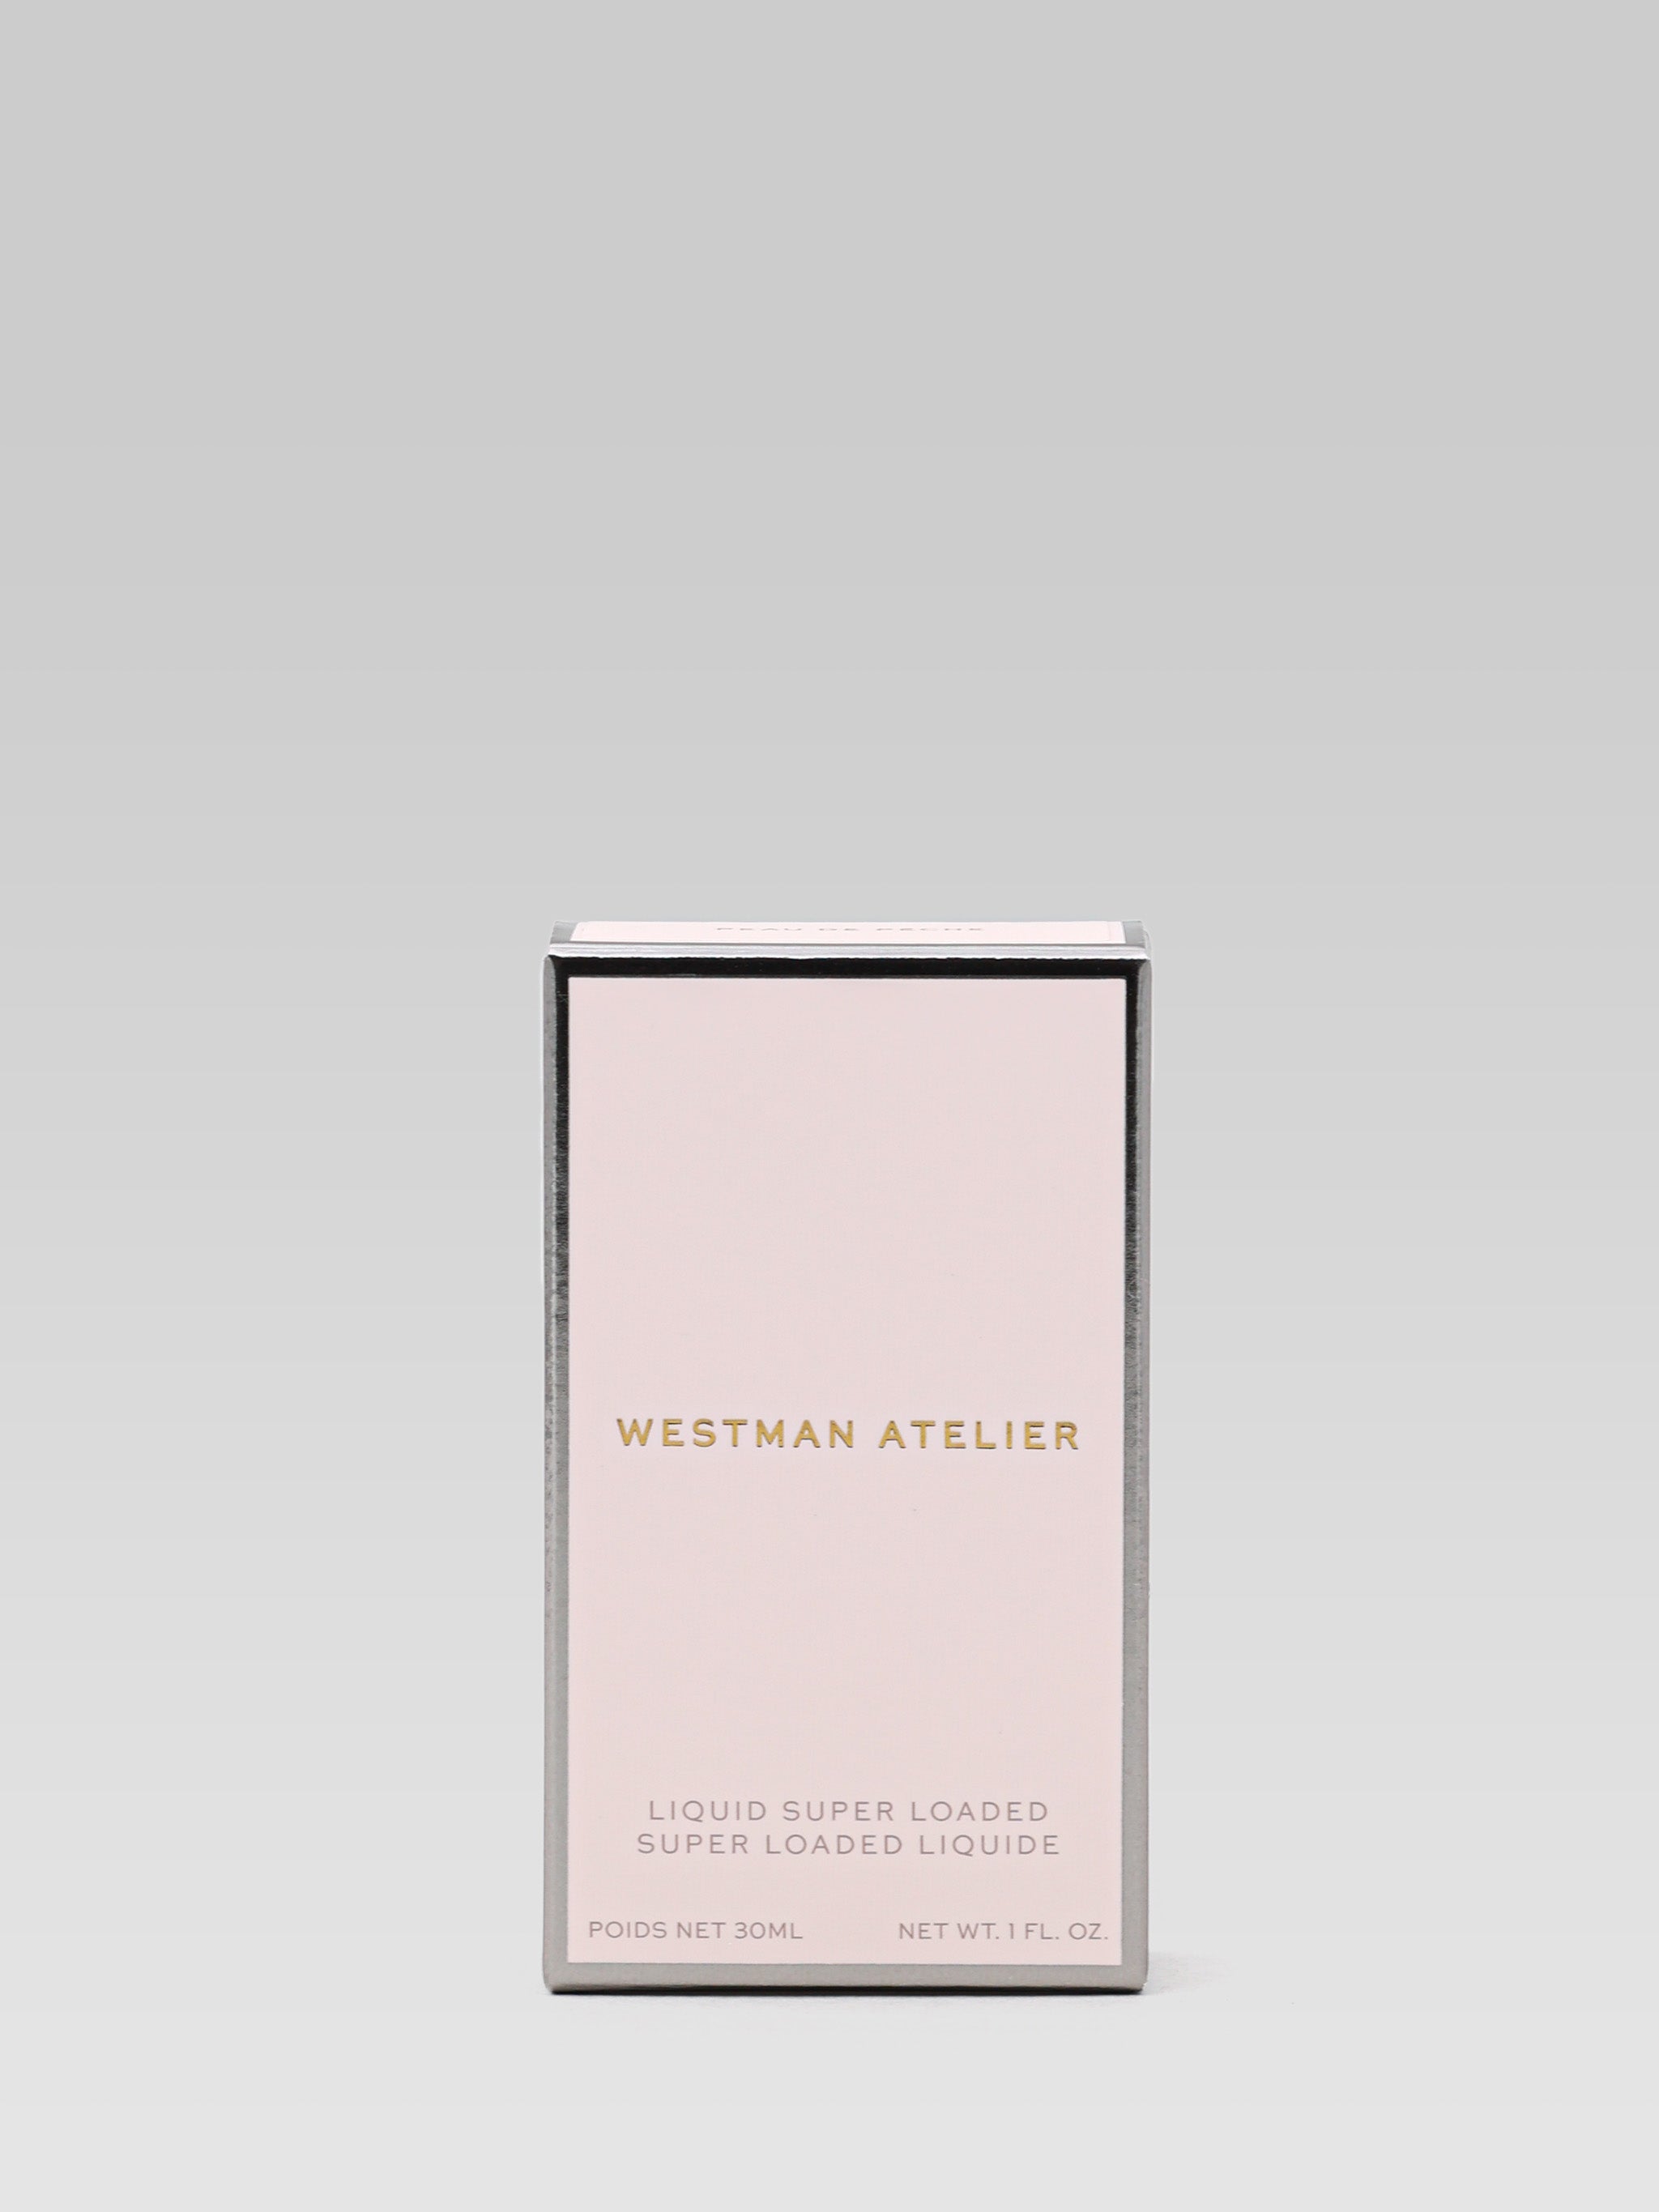 Westman Atelier Liquid Super Loaded Sheer Illuminator light pink packaging